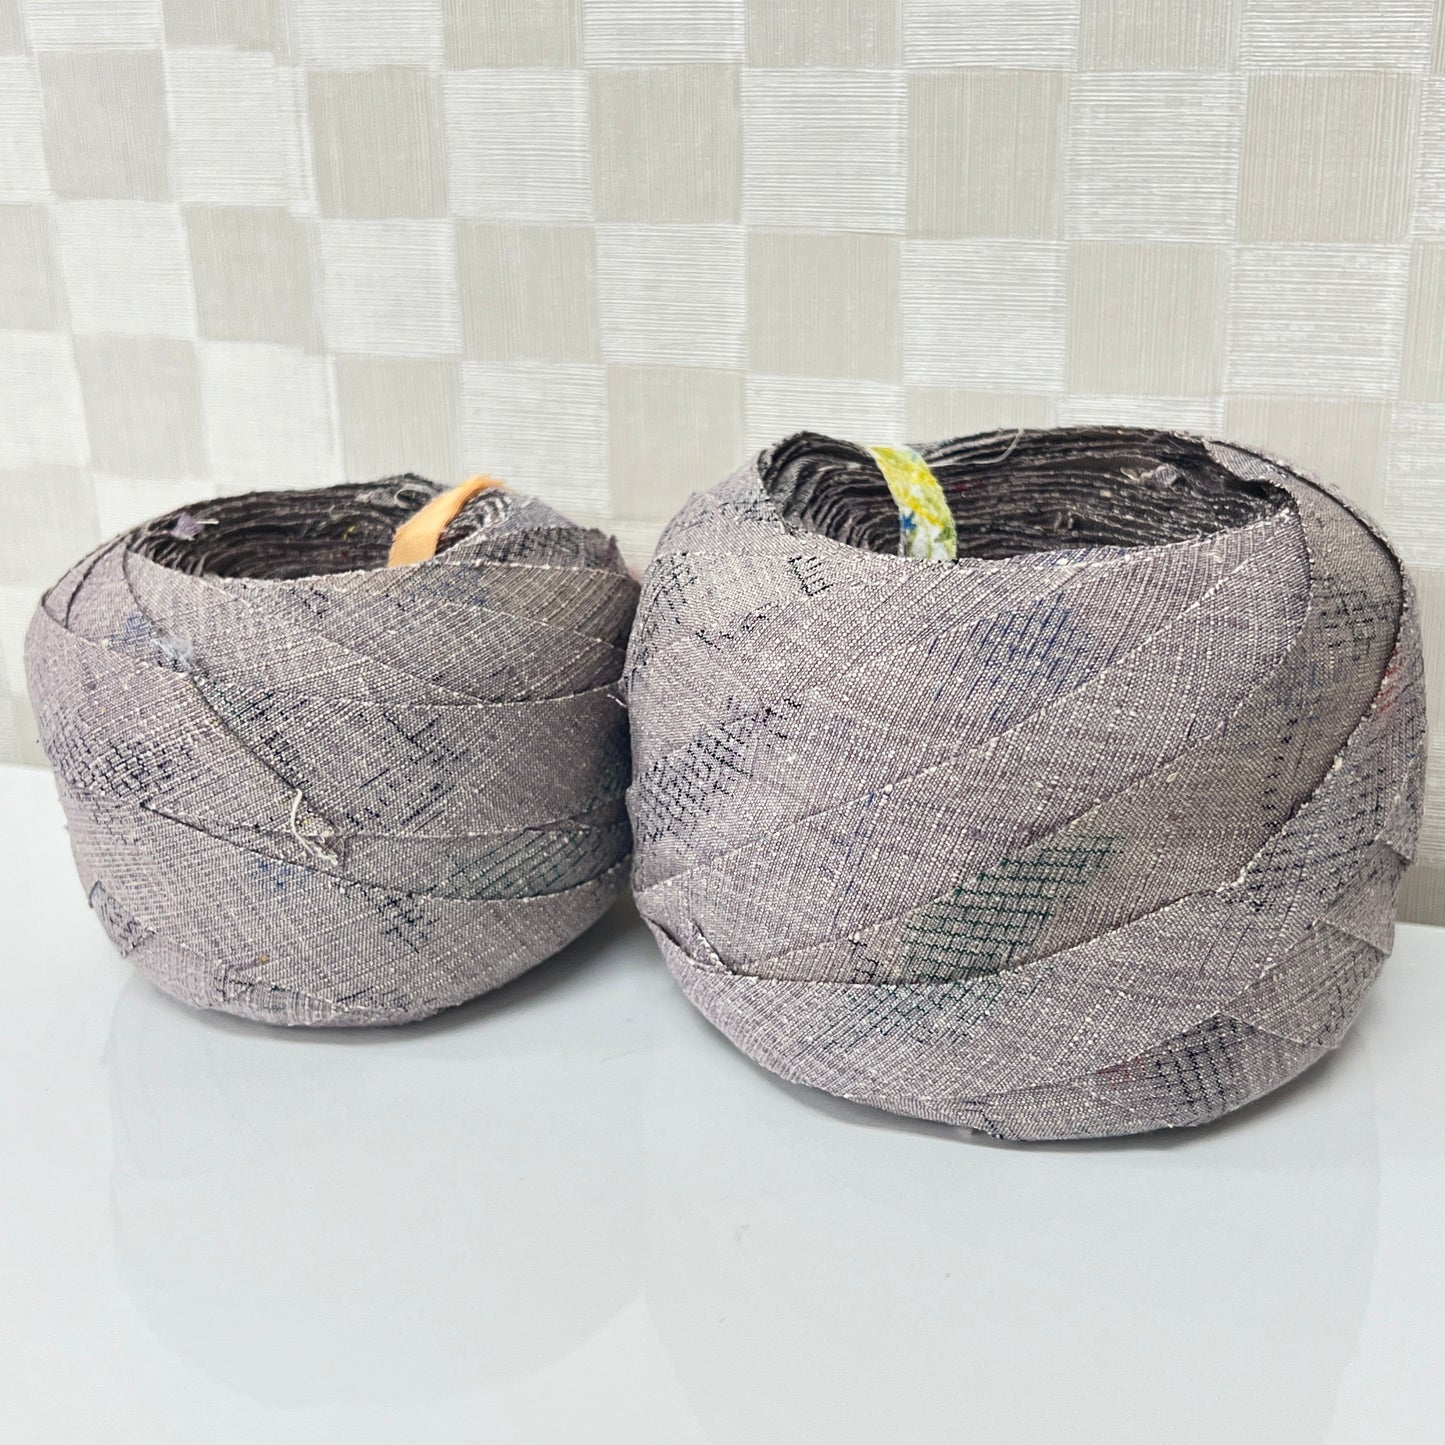 Frill bag yarn set (light purple)